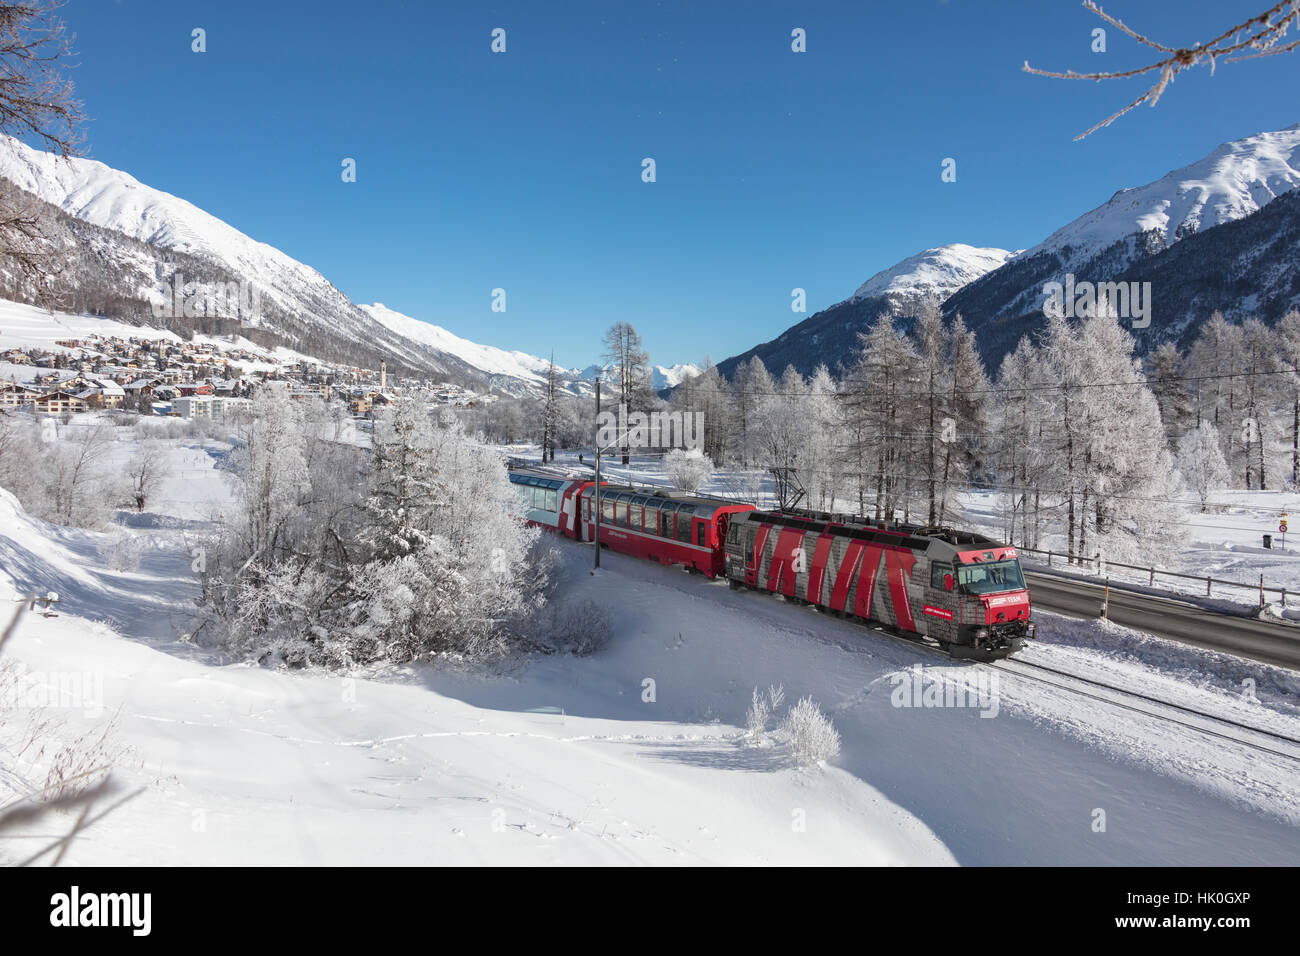 The red train runs across the snowy landscape around Samedan, Maloja, Canton of Graubunden, Engadine, Switzerland Stock Photo